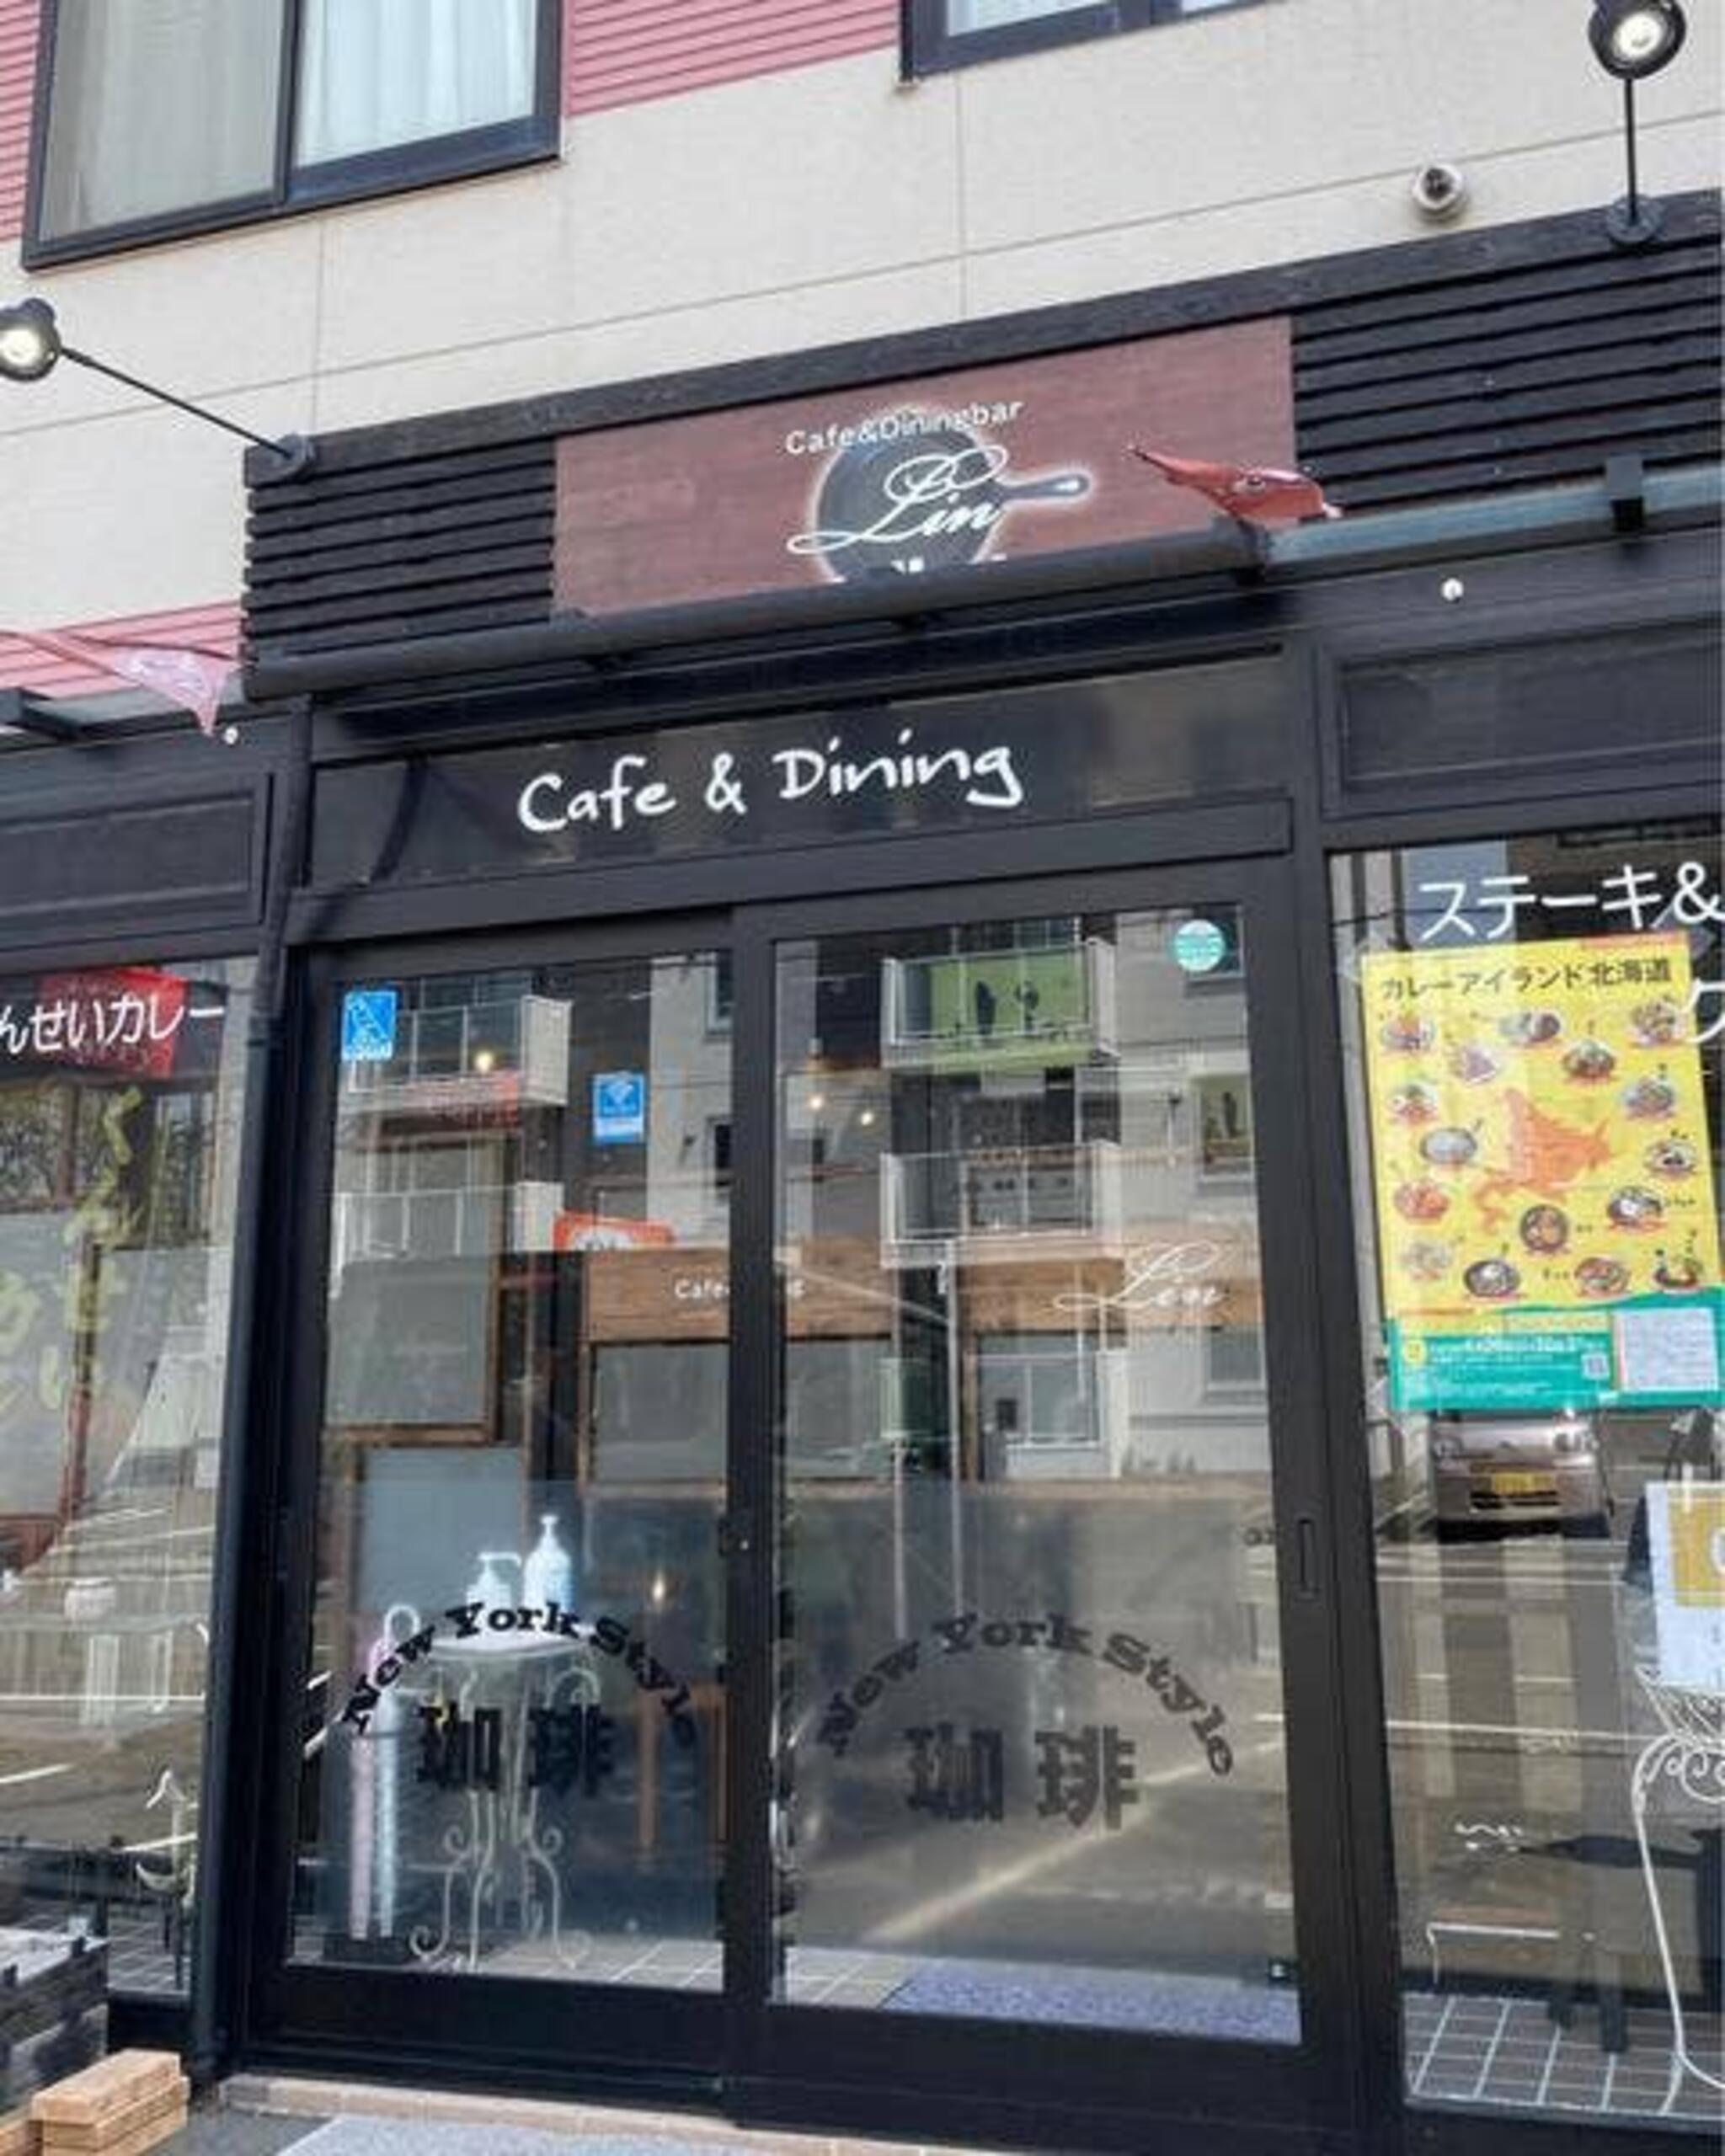 Cafe&Dining Bar Linの代表写真6